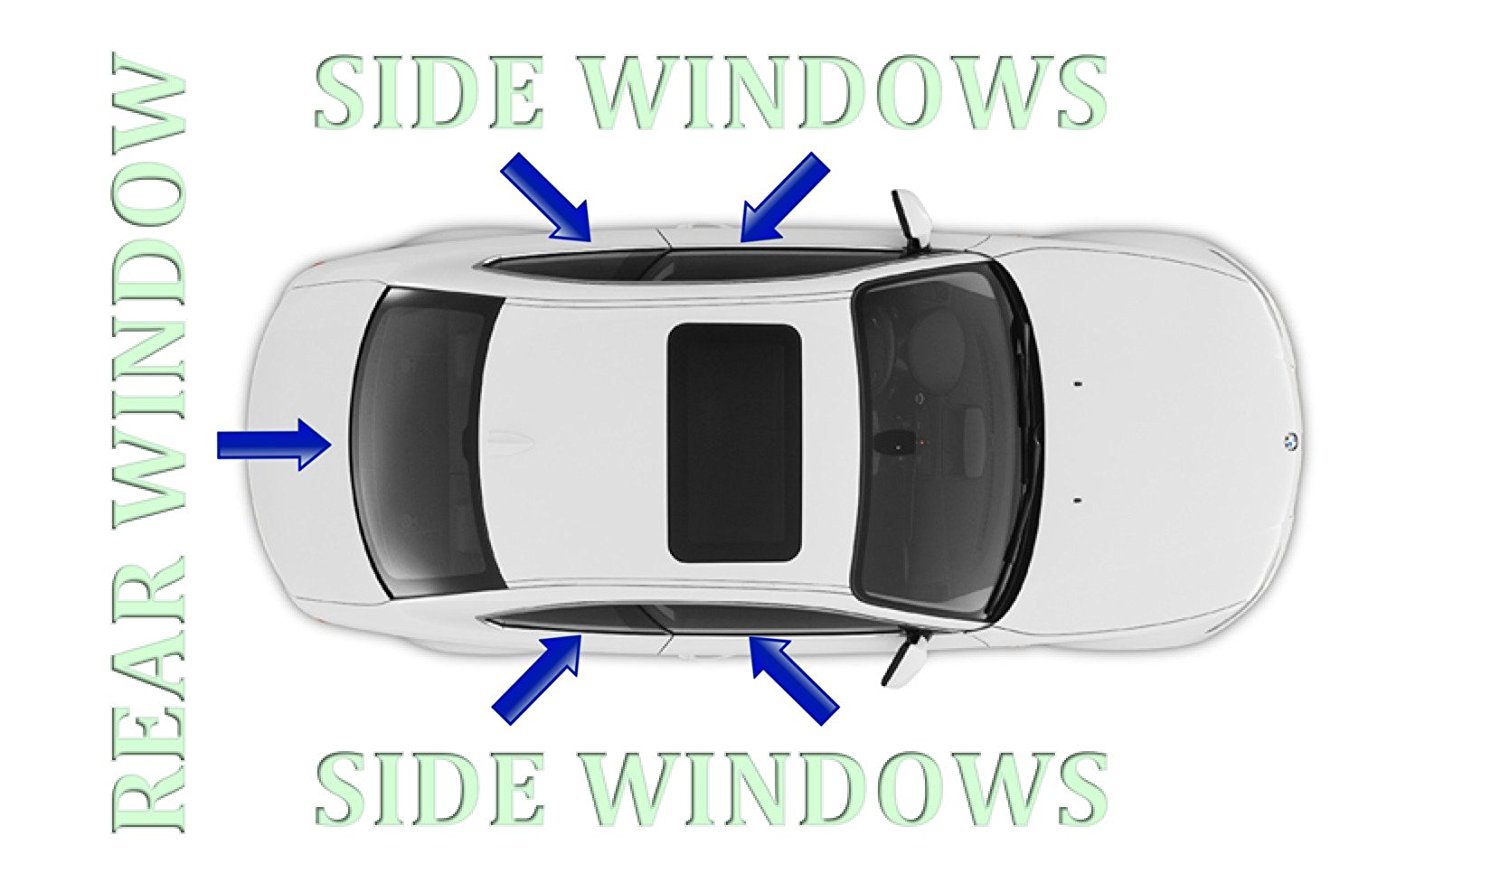 Autotech Park Precut Window Tinting Film for 2012-2018 Toyota Yaris 2 Door